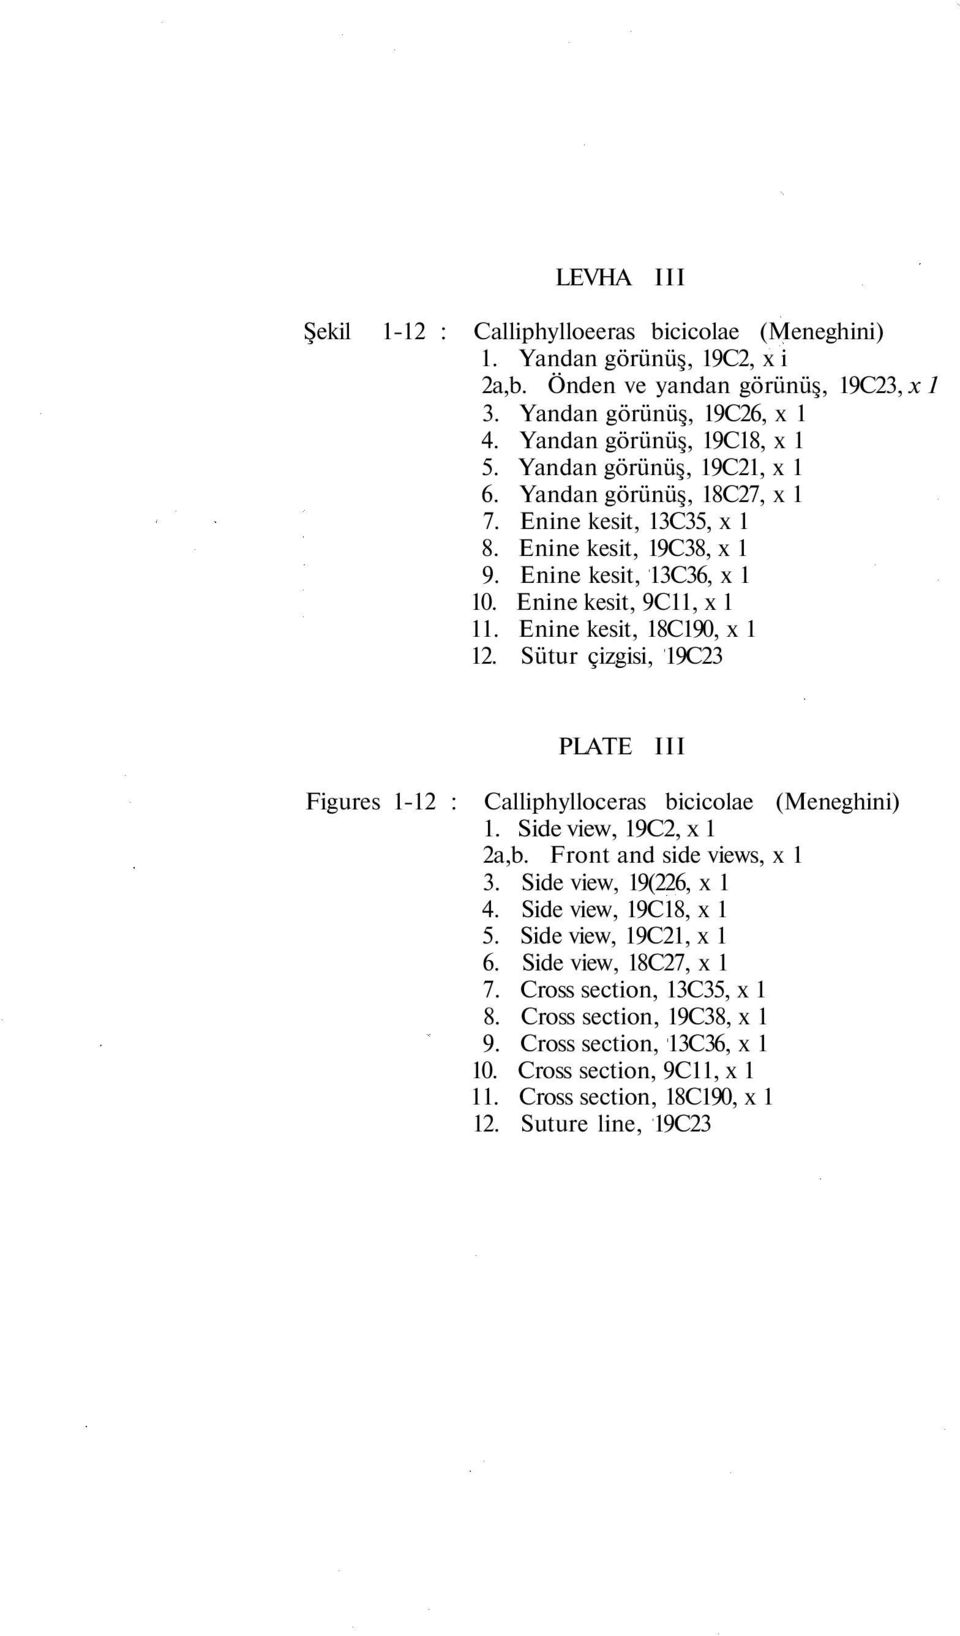 Sütur çizgisi, 19C23 Figures 1-12 : PLATE III Calliphylloceras bicicolae (Meneghini) 1. Side view, 19C2, x 1 2a,b. Front and side views, x 1 3. Side view, 19(226, x 1 4. Side view, 19C18, x 1 5.